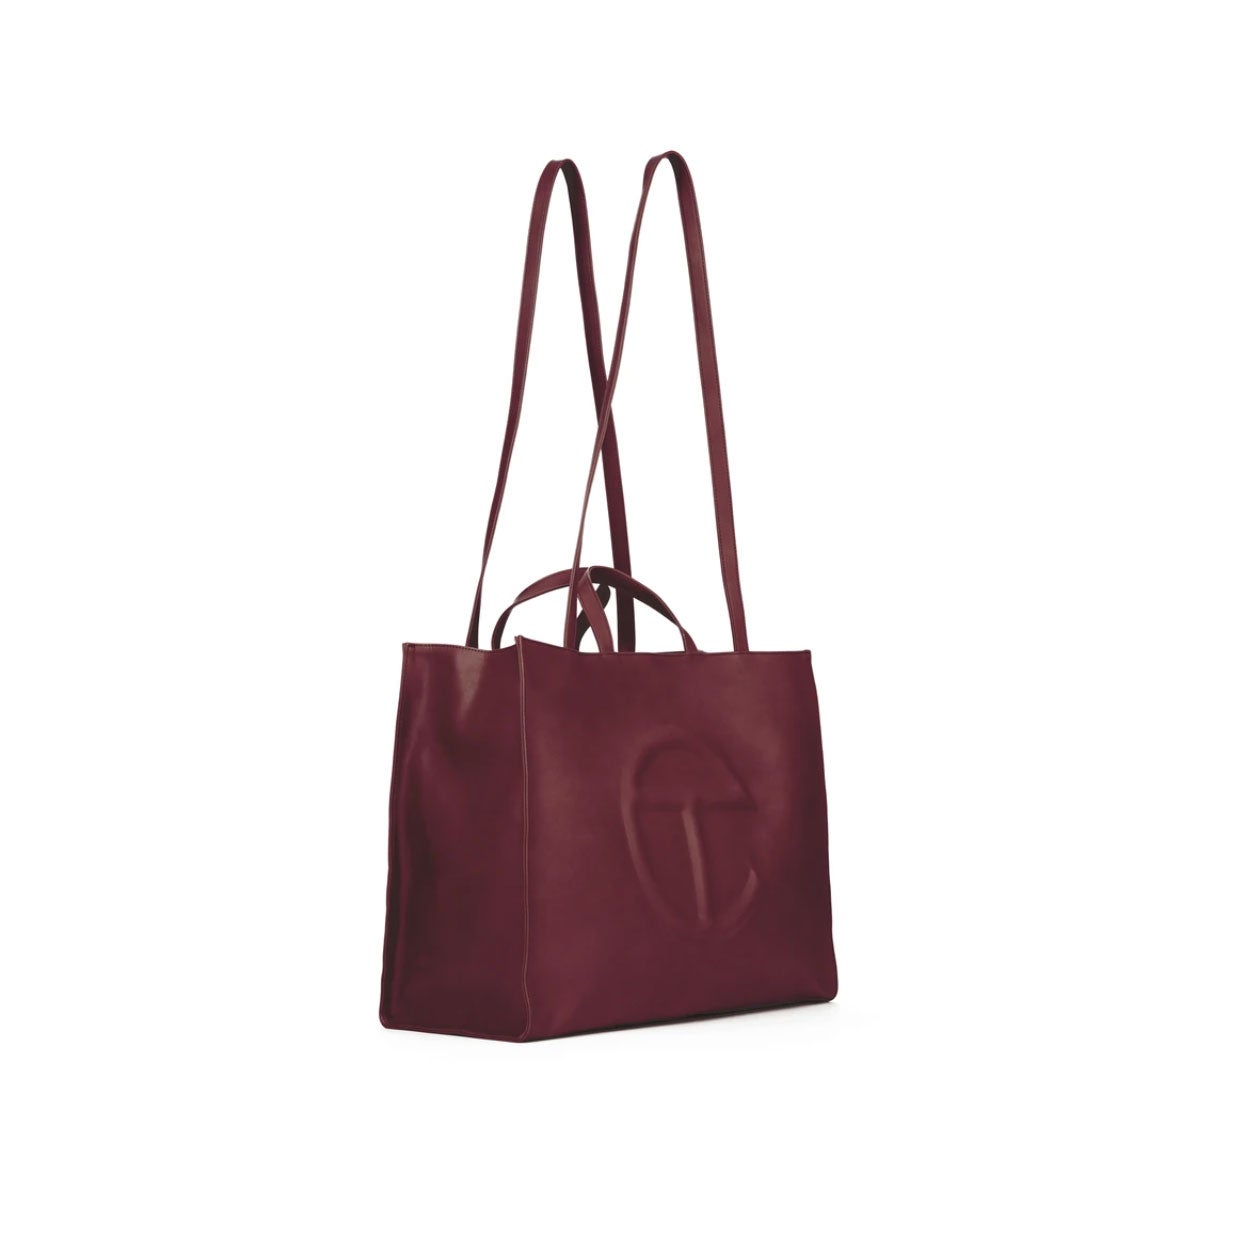 Trendy Handbags For Mom That Won't Break The Bank | Essence